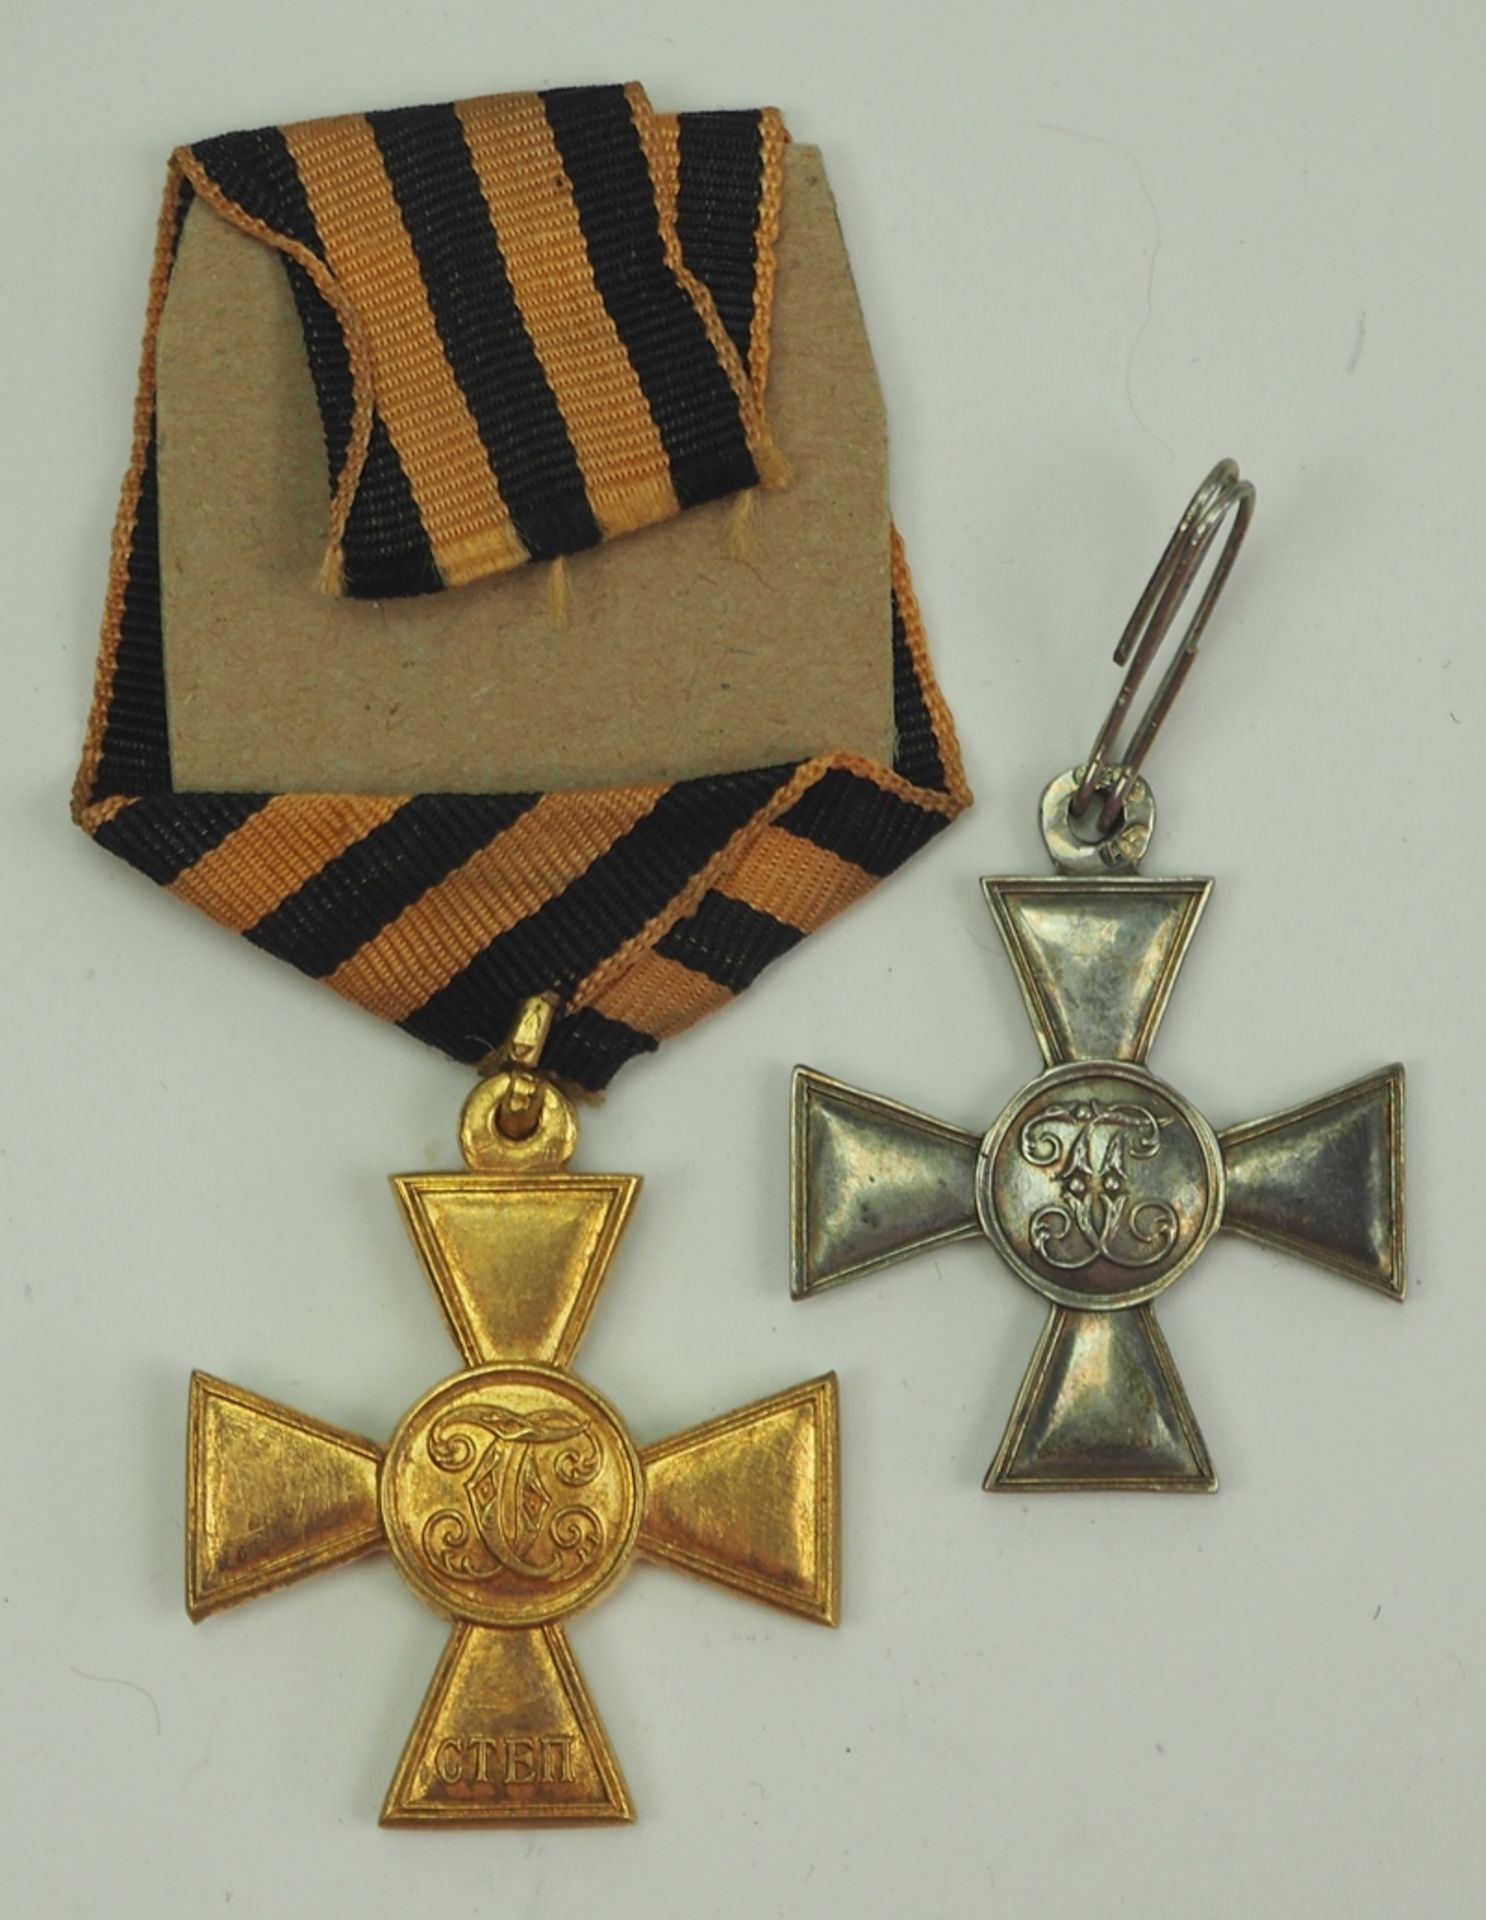 Russland: St. Georgs Orden, Soldatenkreuz - Lot von 2 Exemplaren. - Bild 2 aus 3